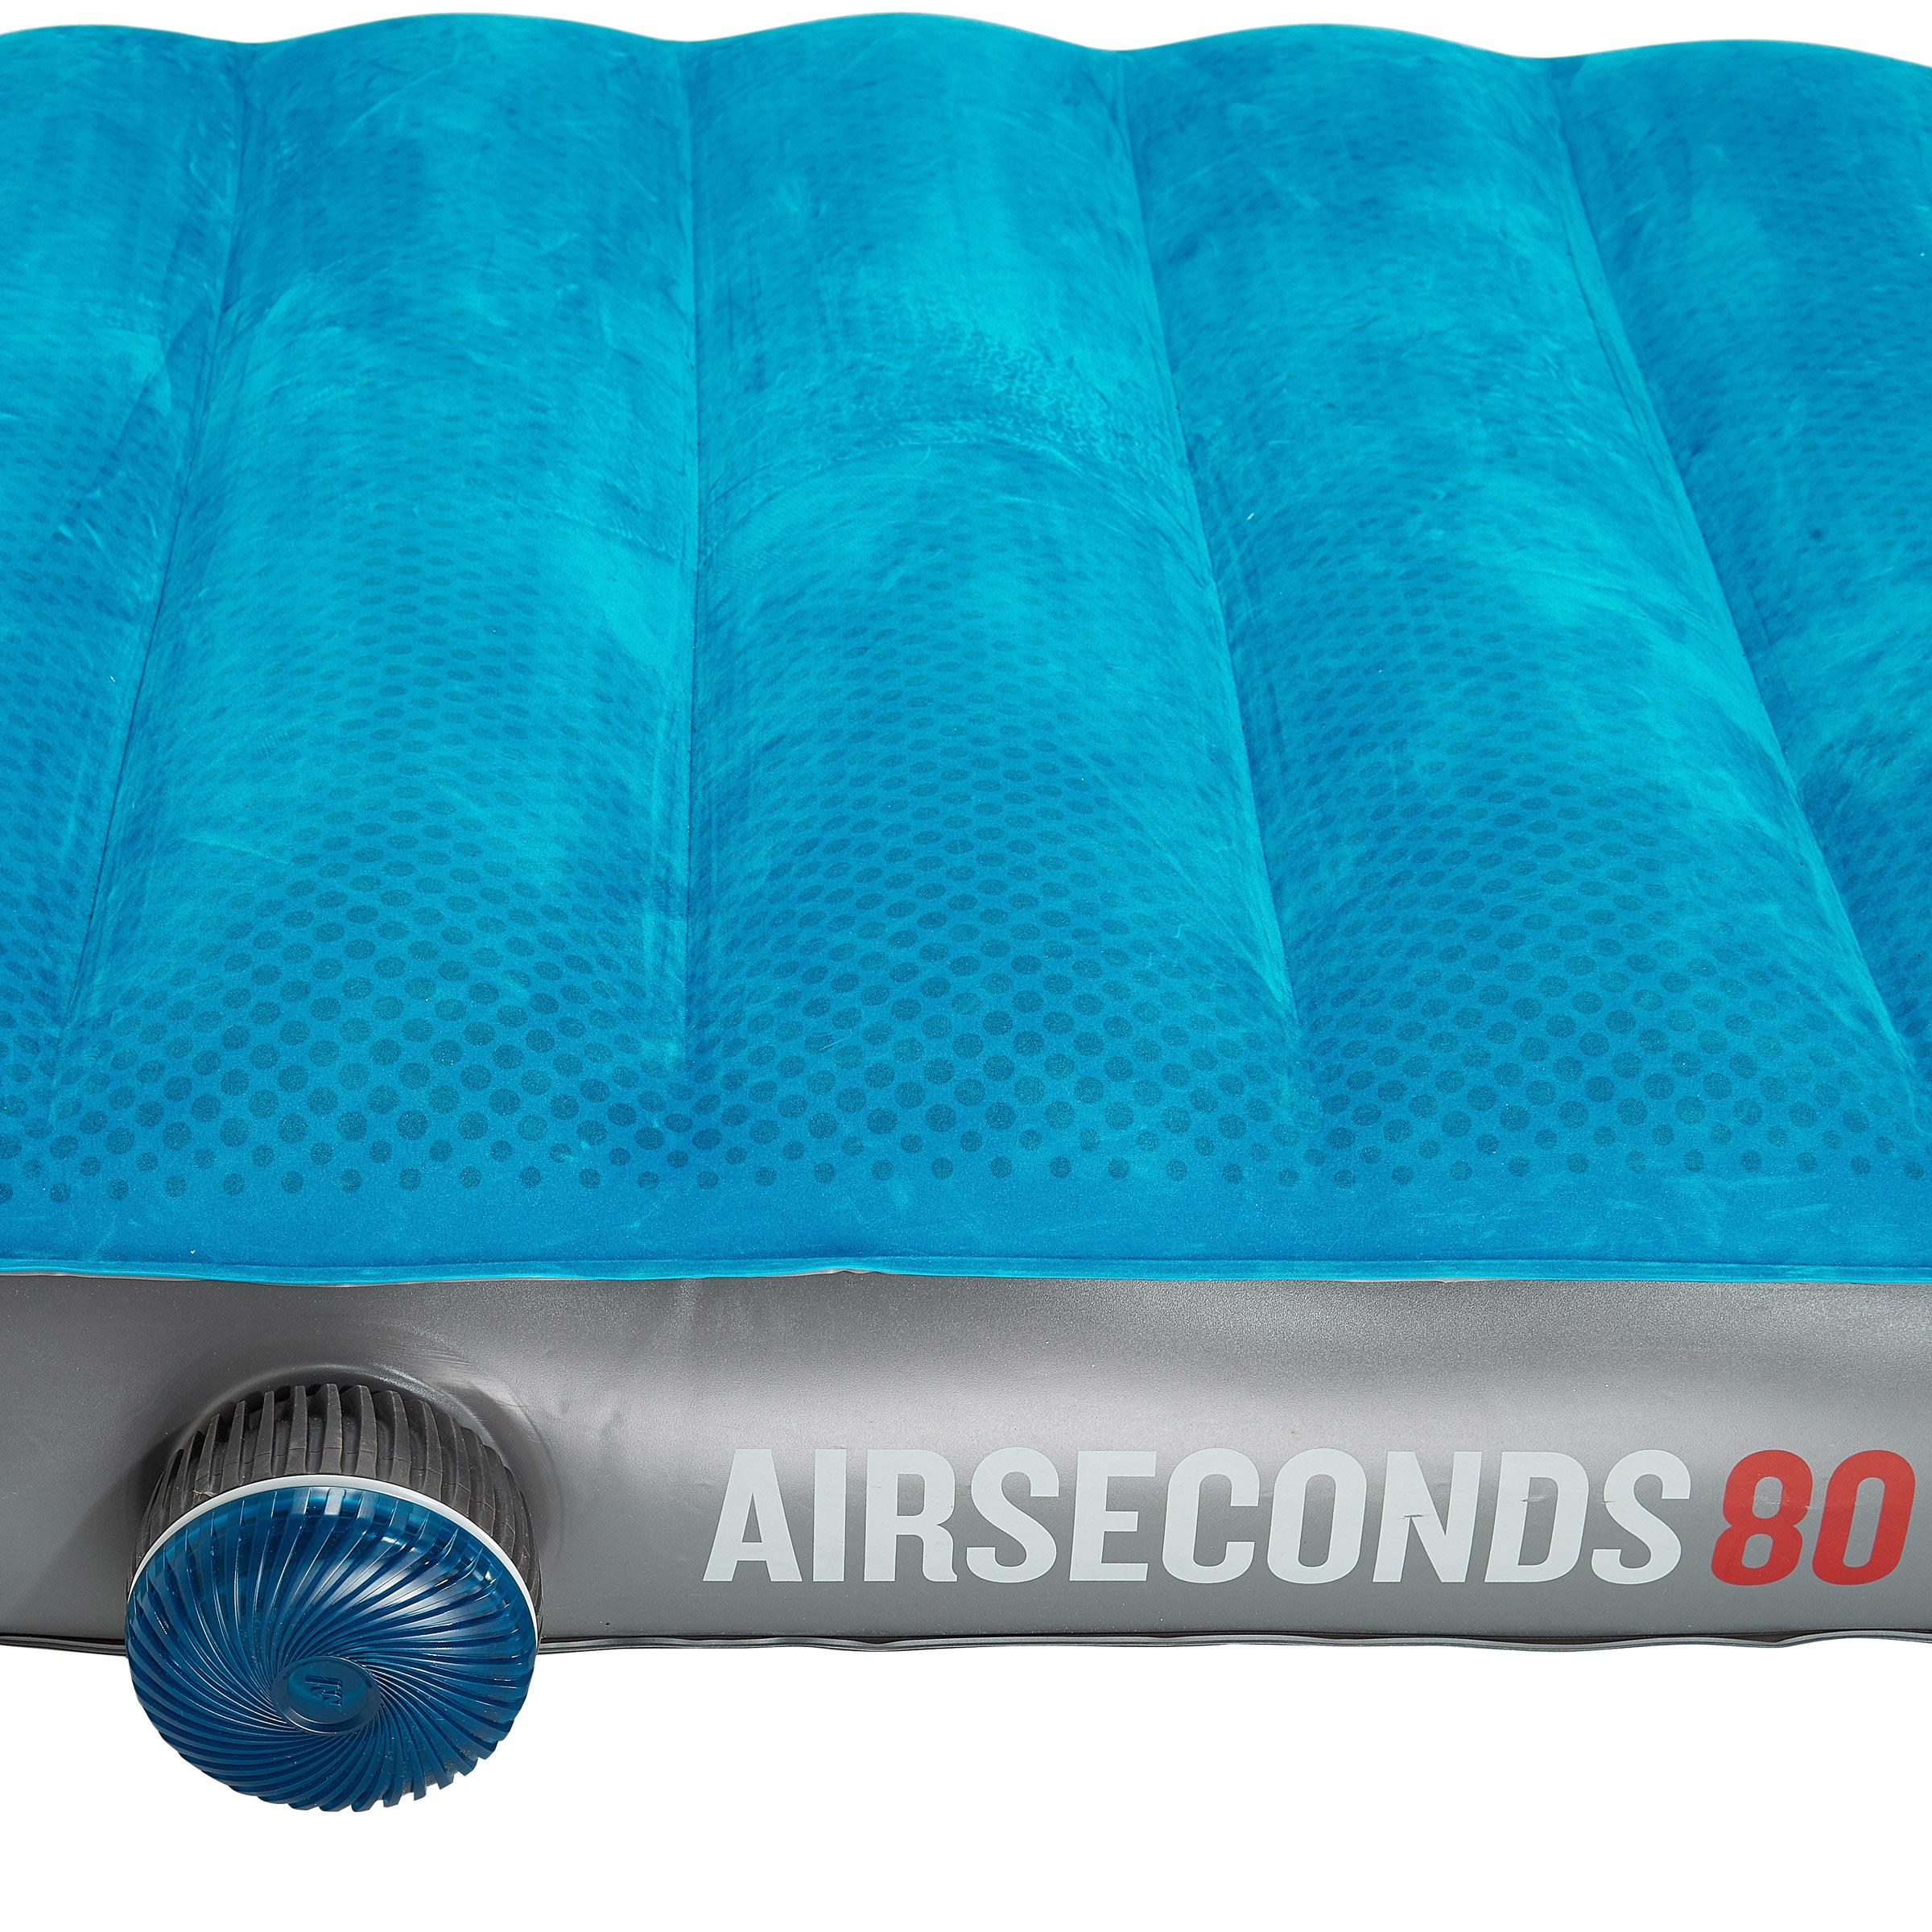 air seconds 80